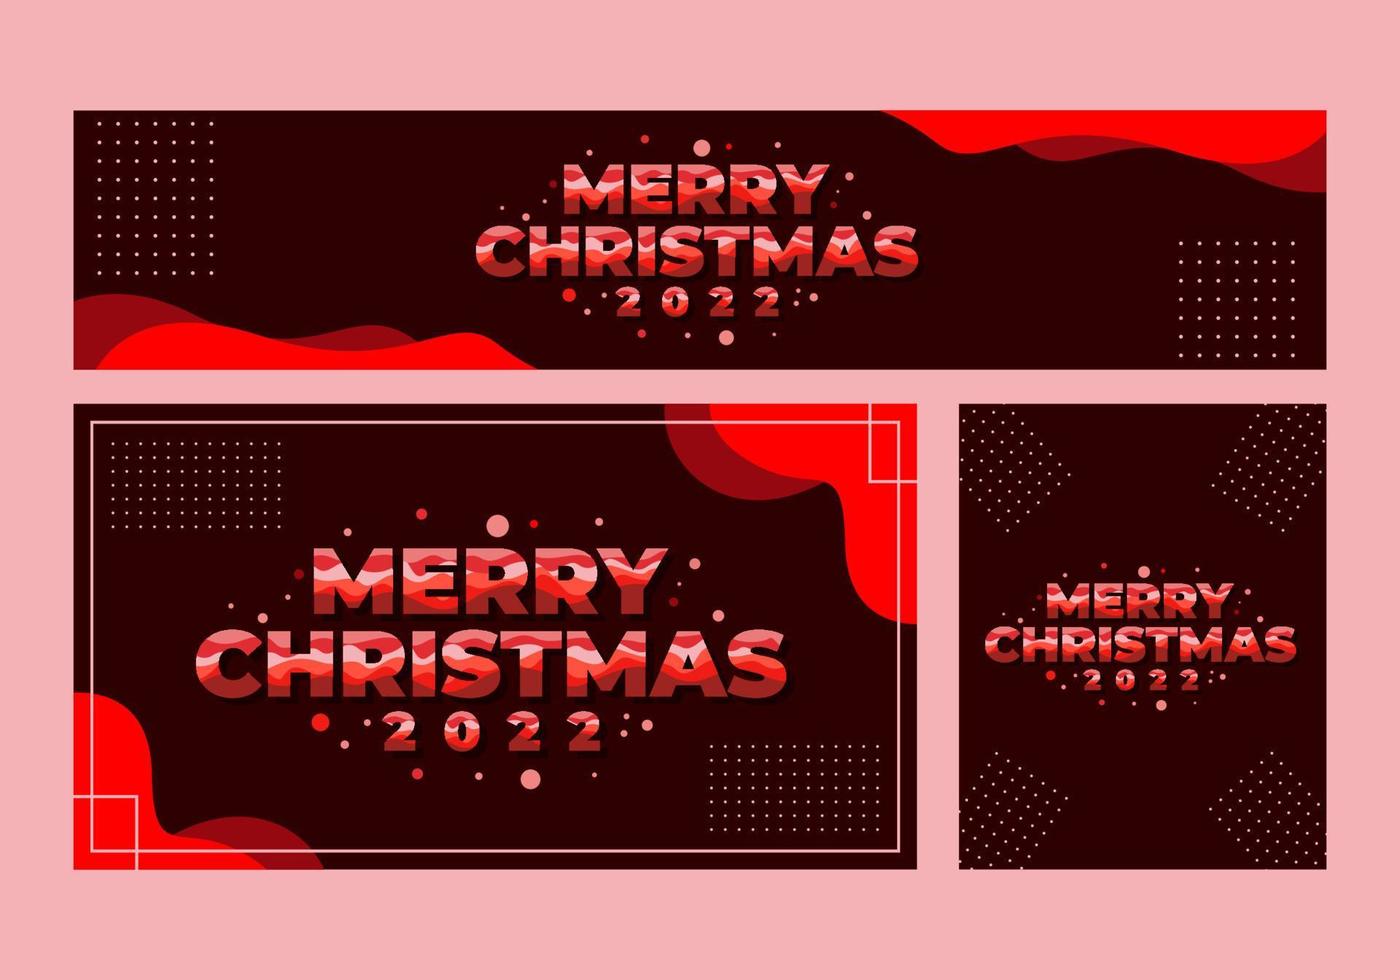 Merry Christmas 2022 text effect banner vector